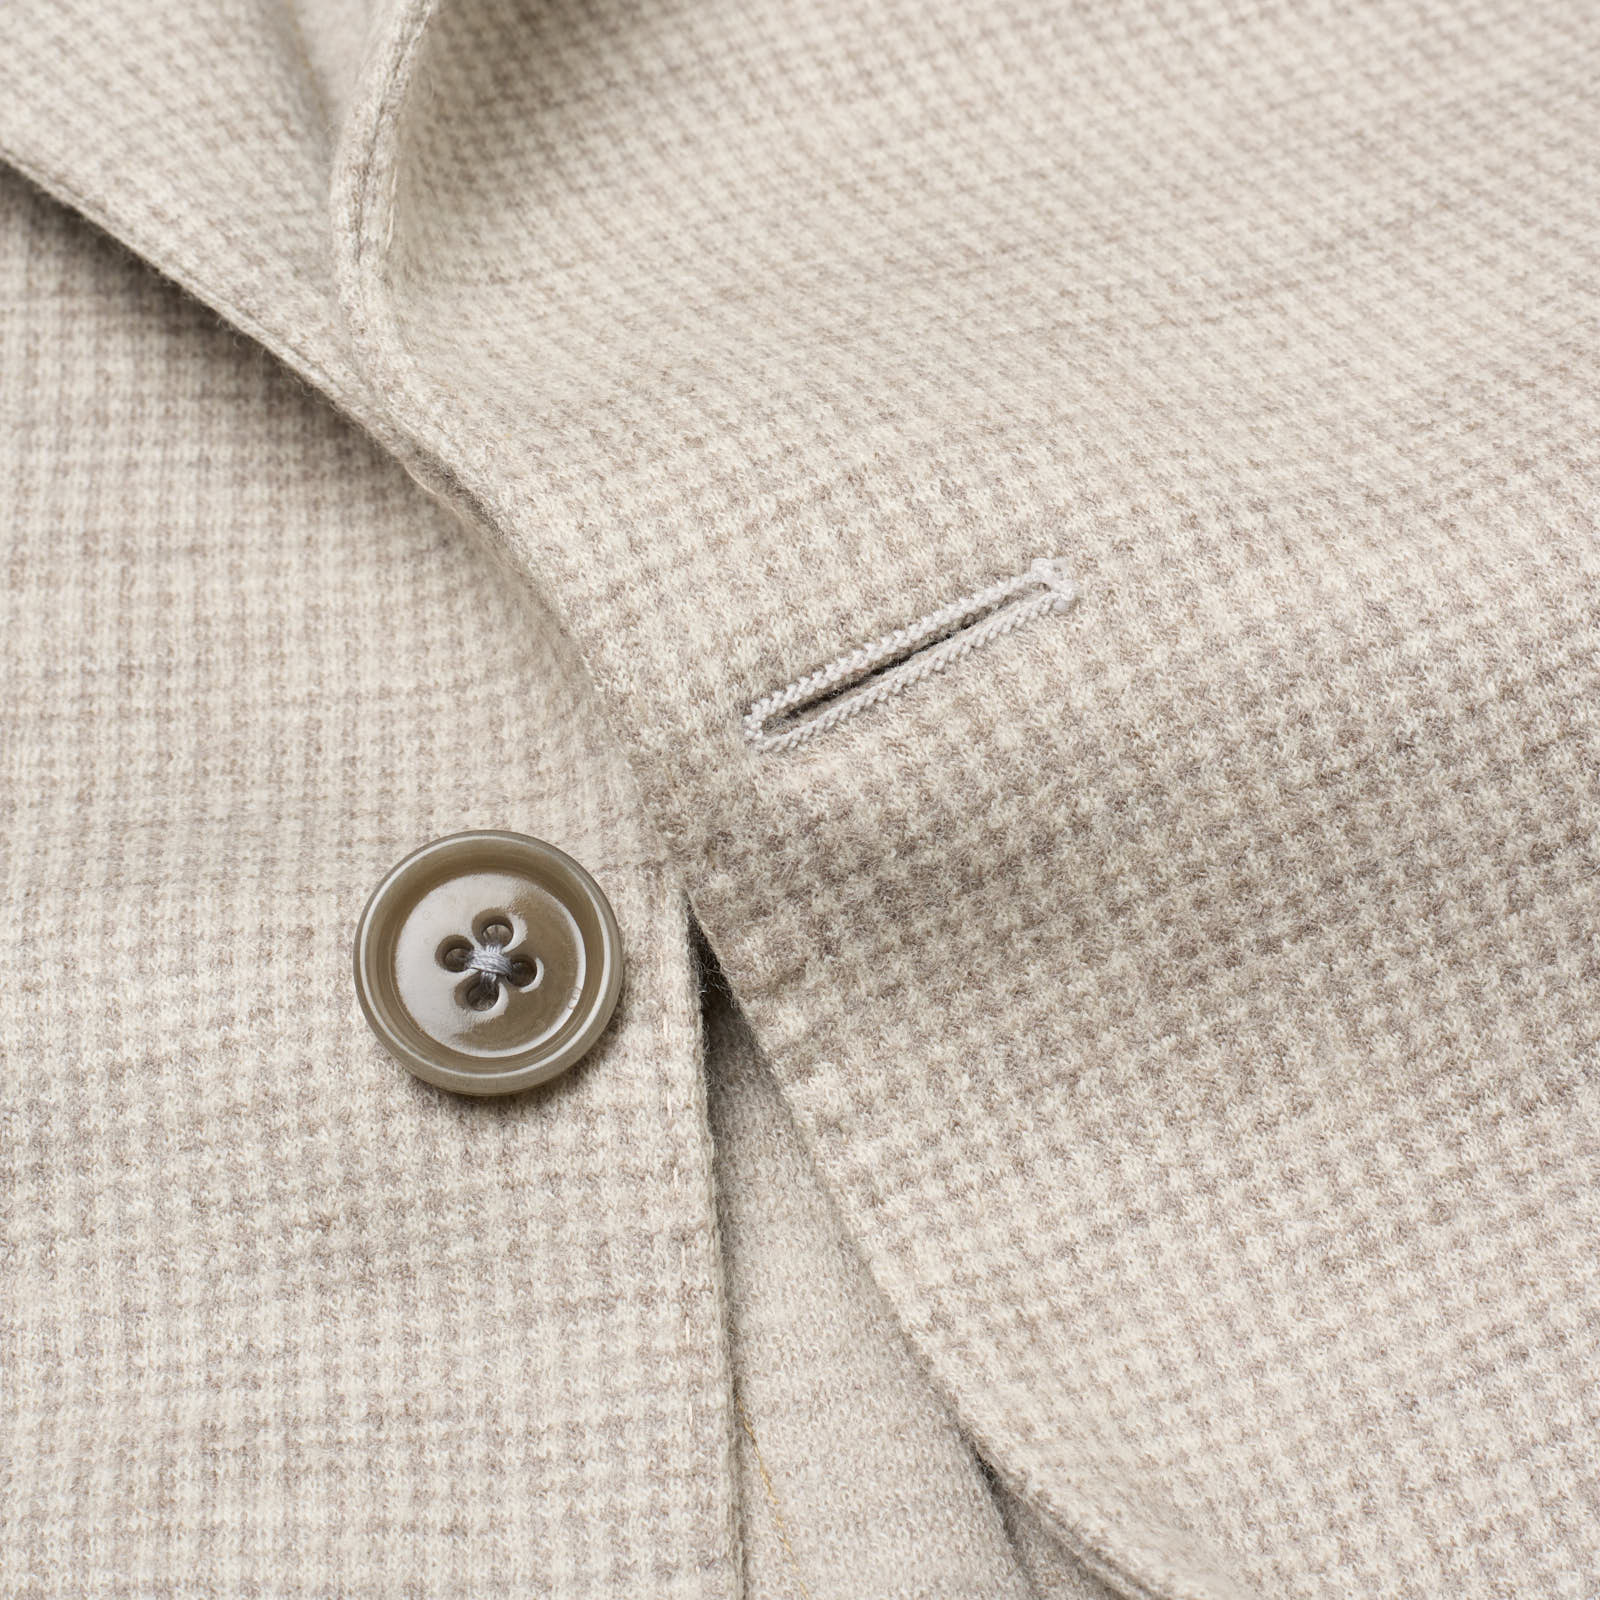 SARTORIA PARTENOPEA Beige Flannel Peak Lapel Wool Suit NEW Current Model